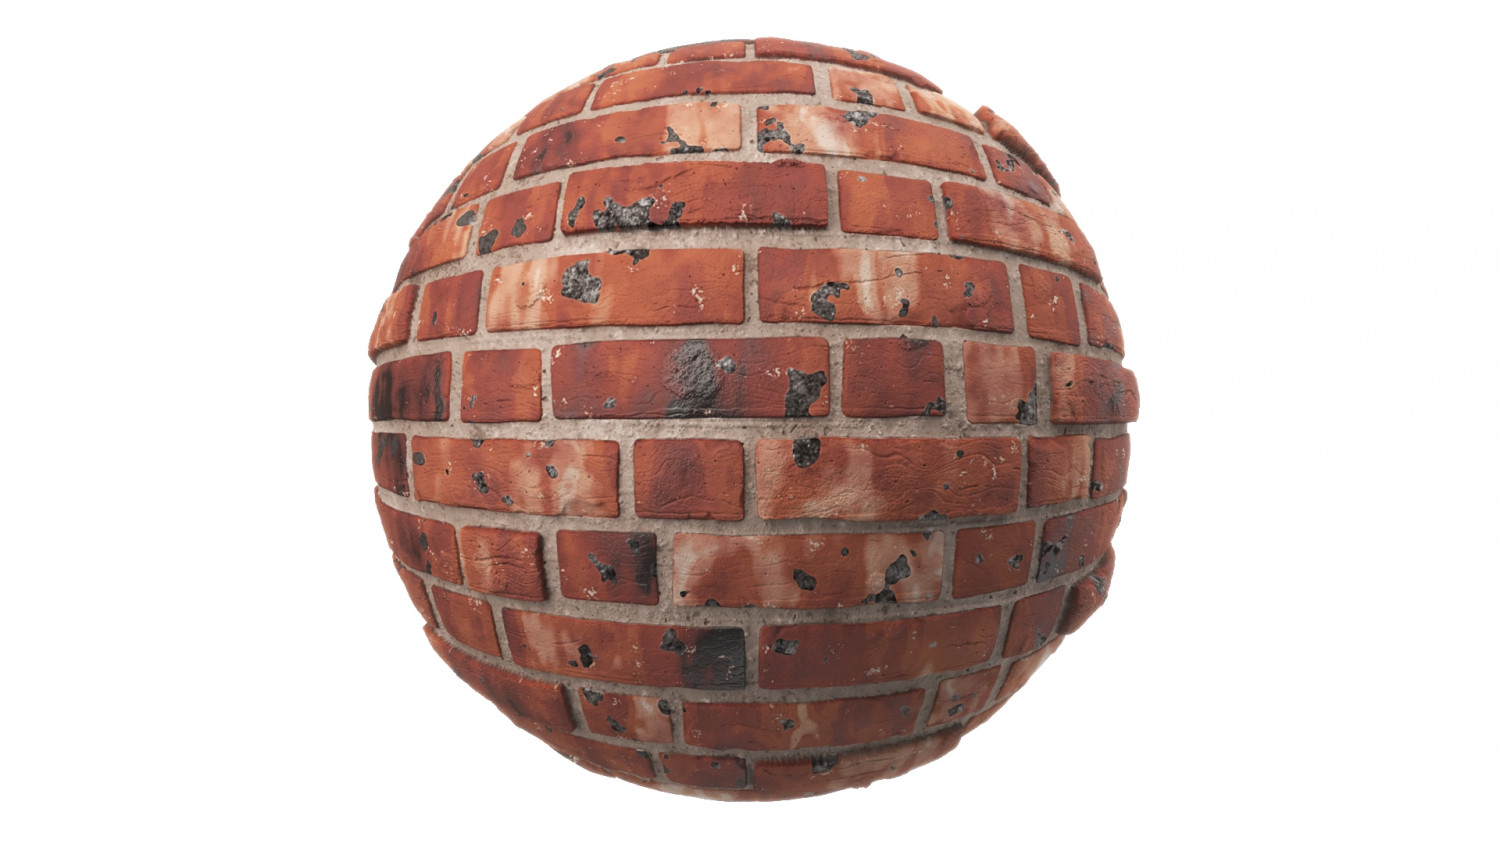 Damaged red brick texture